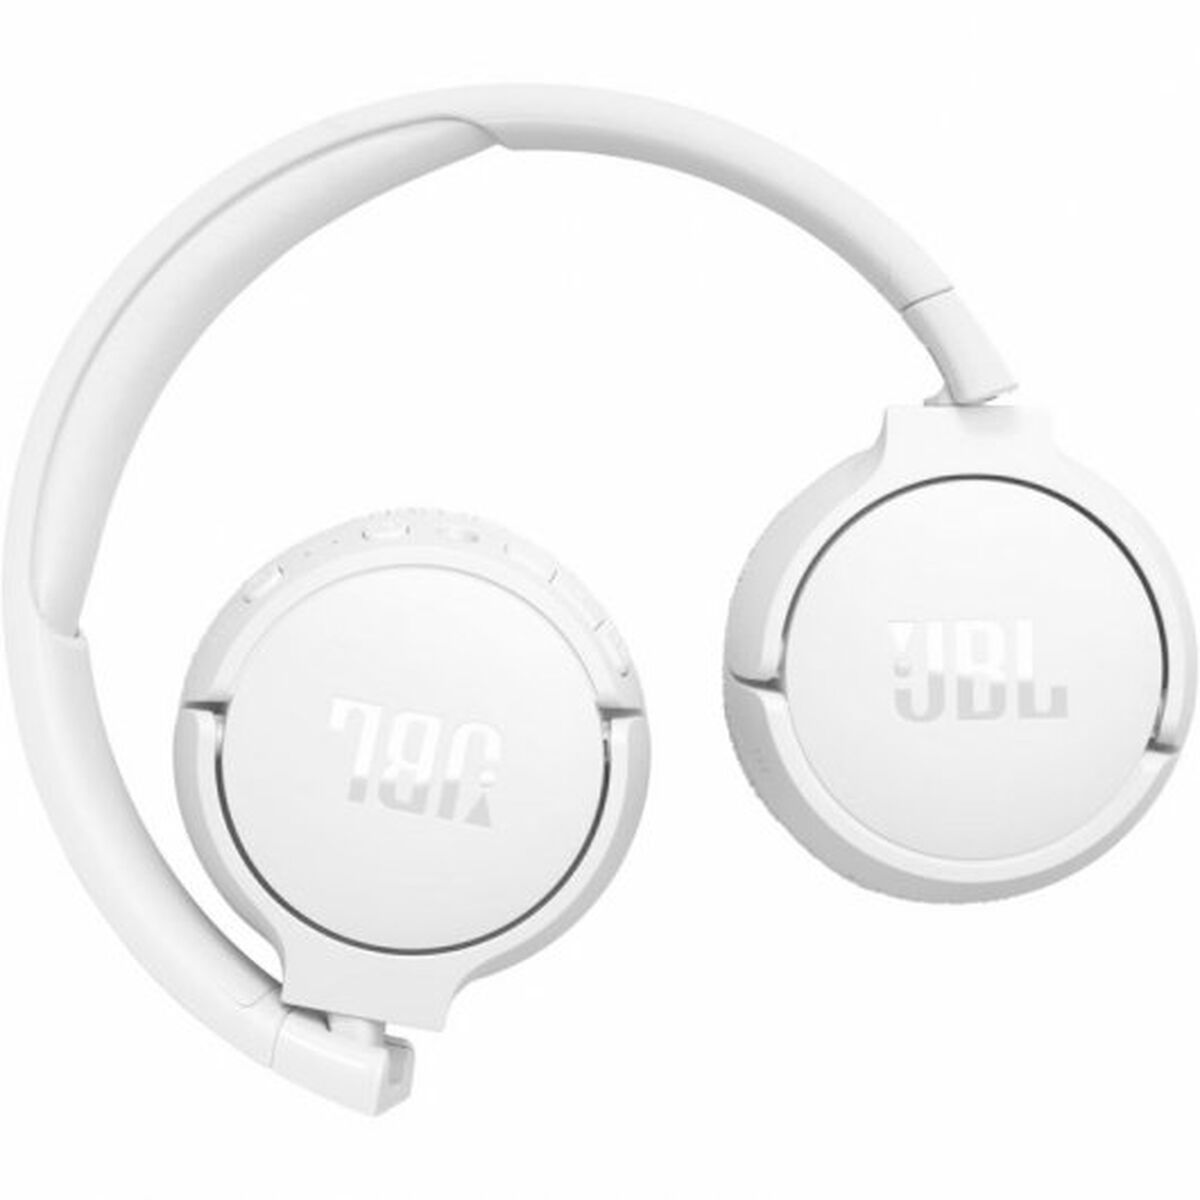 Kaufe Kopfhörer mit Mikrofon JBL 670NC Weiß bei AWK Flagship um € 125.00